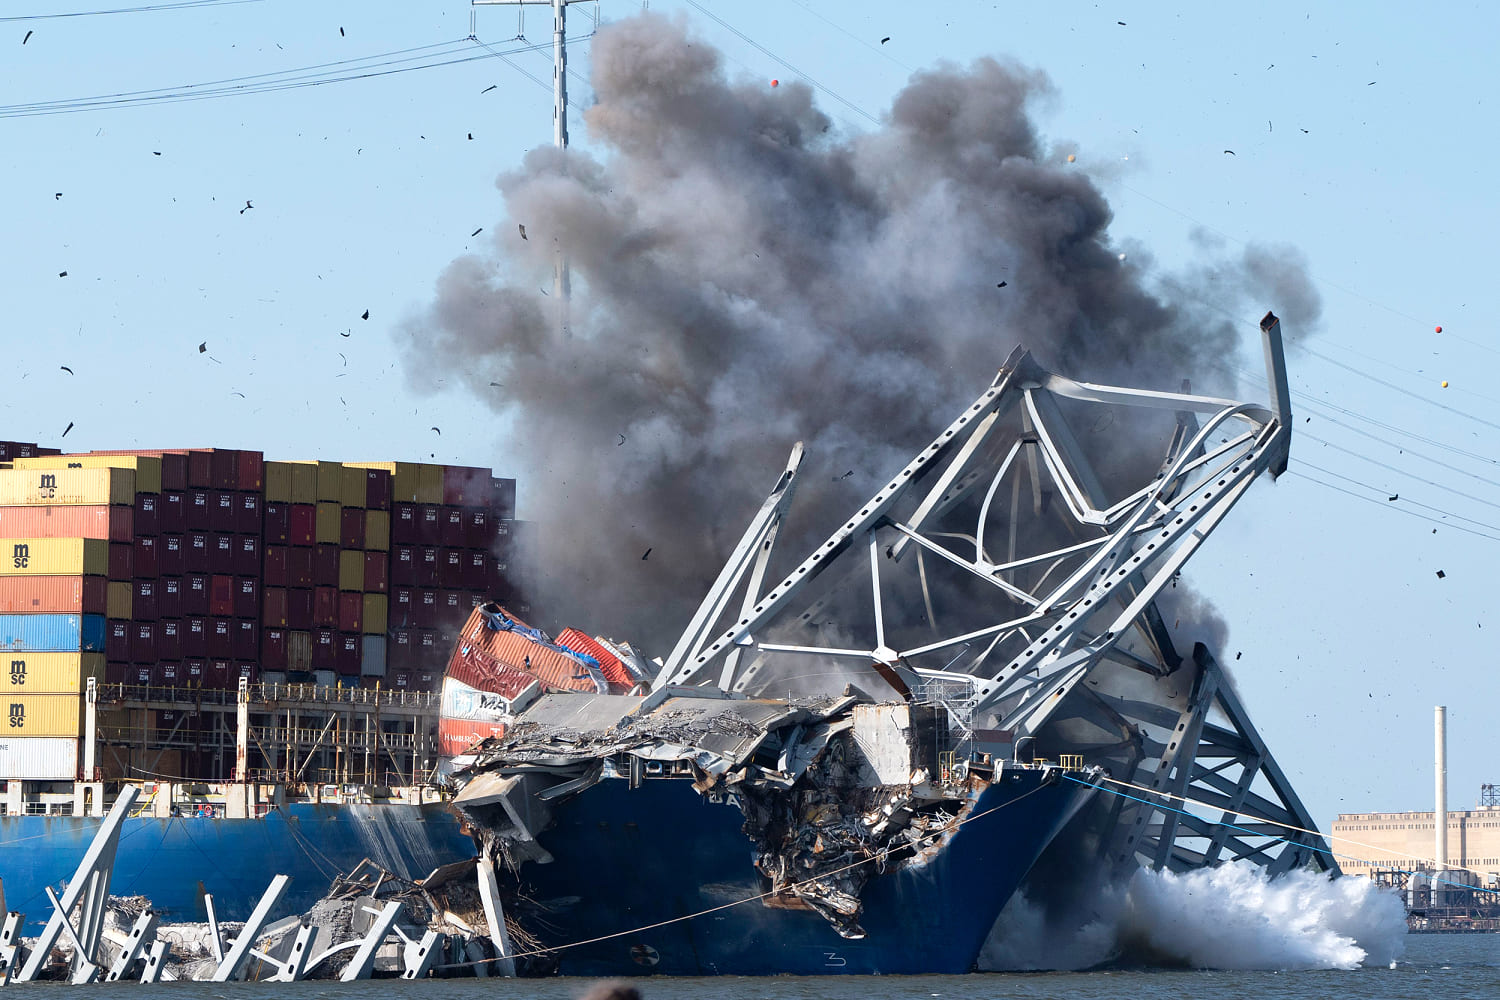 Baltimore bridge span removed, ship freed with precision blast